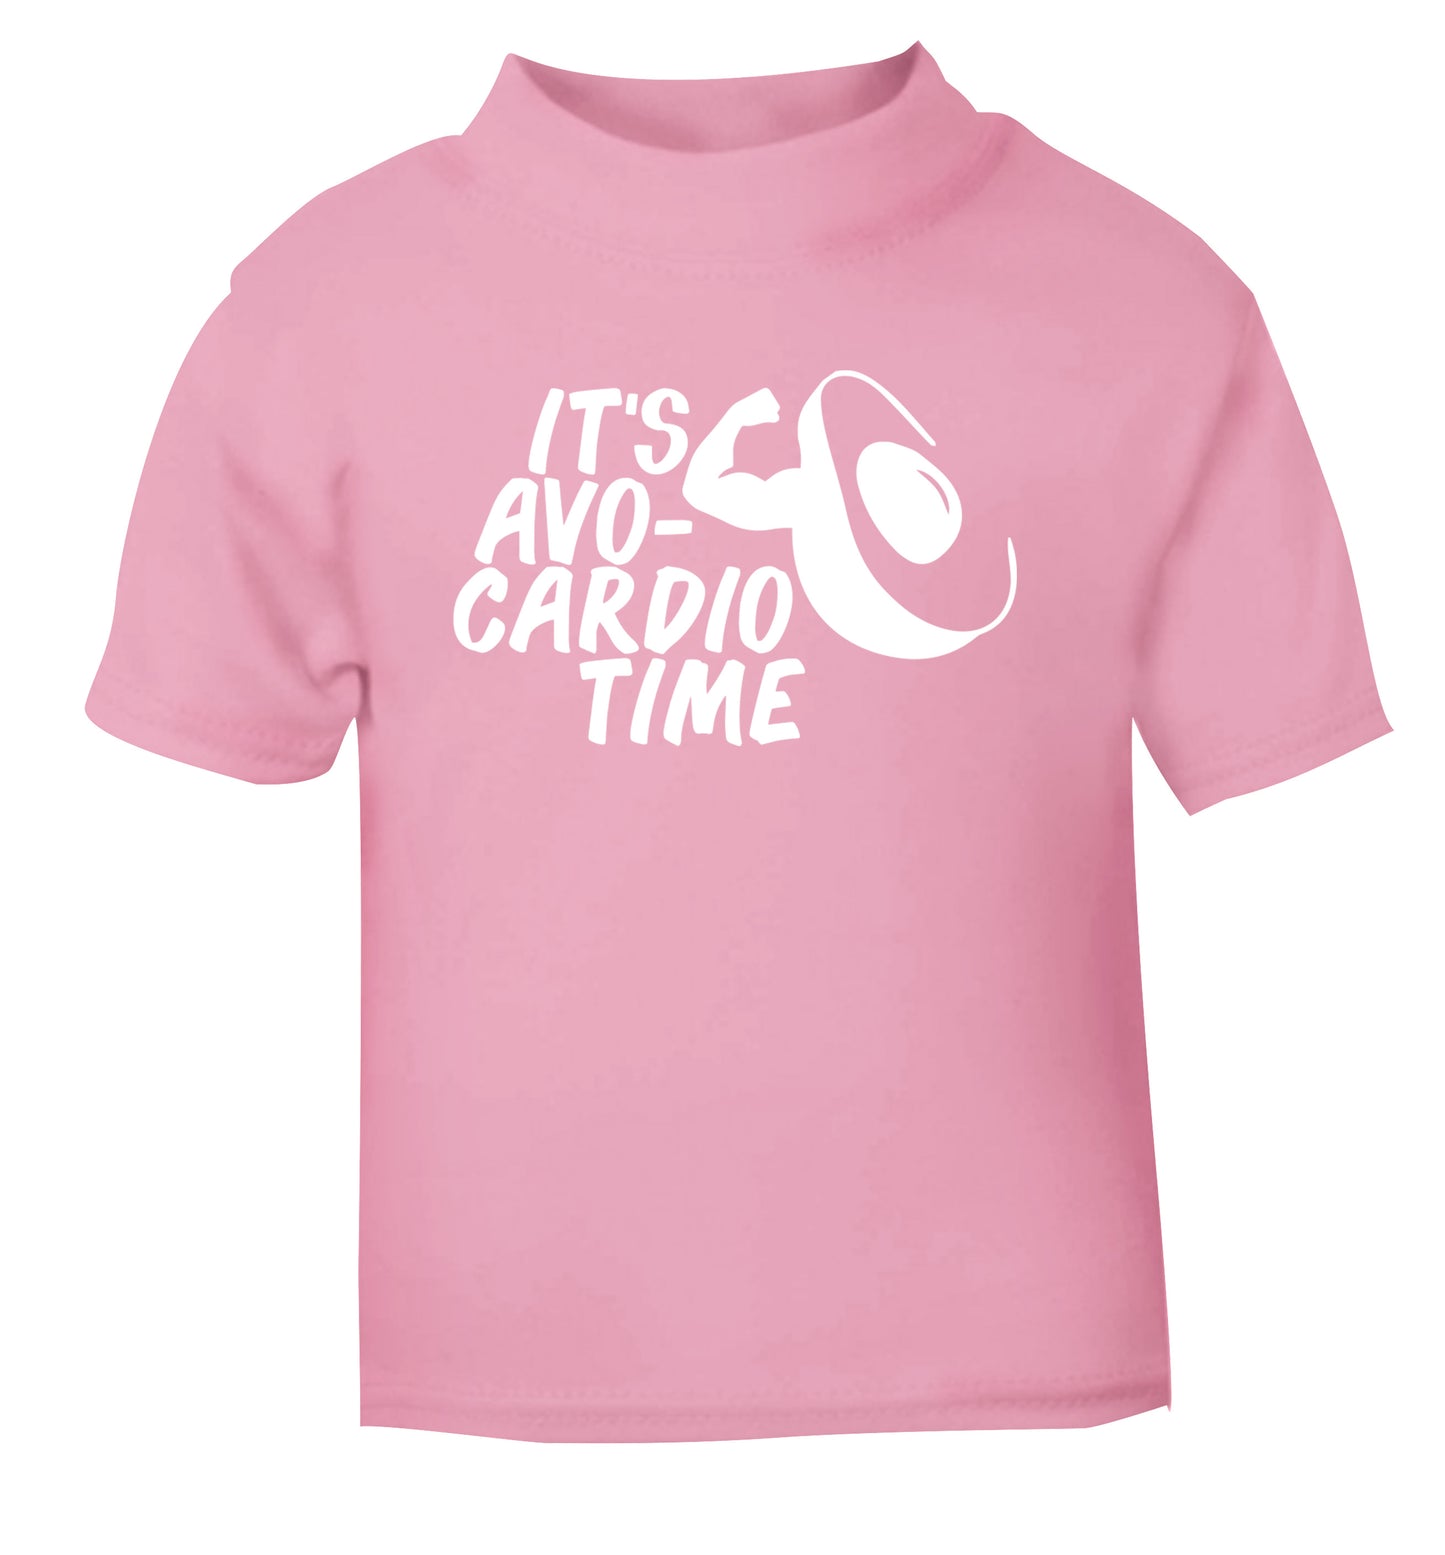 It's avo-cardio time light pink Baby Toddler Tshirt 2 Years